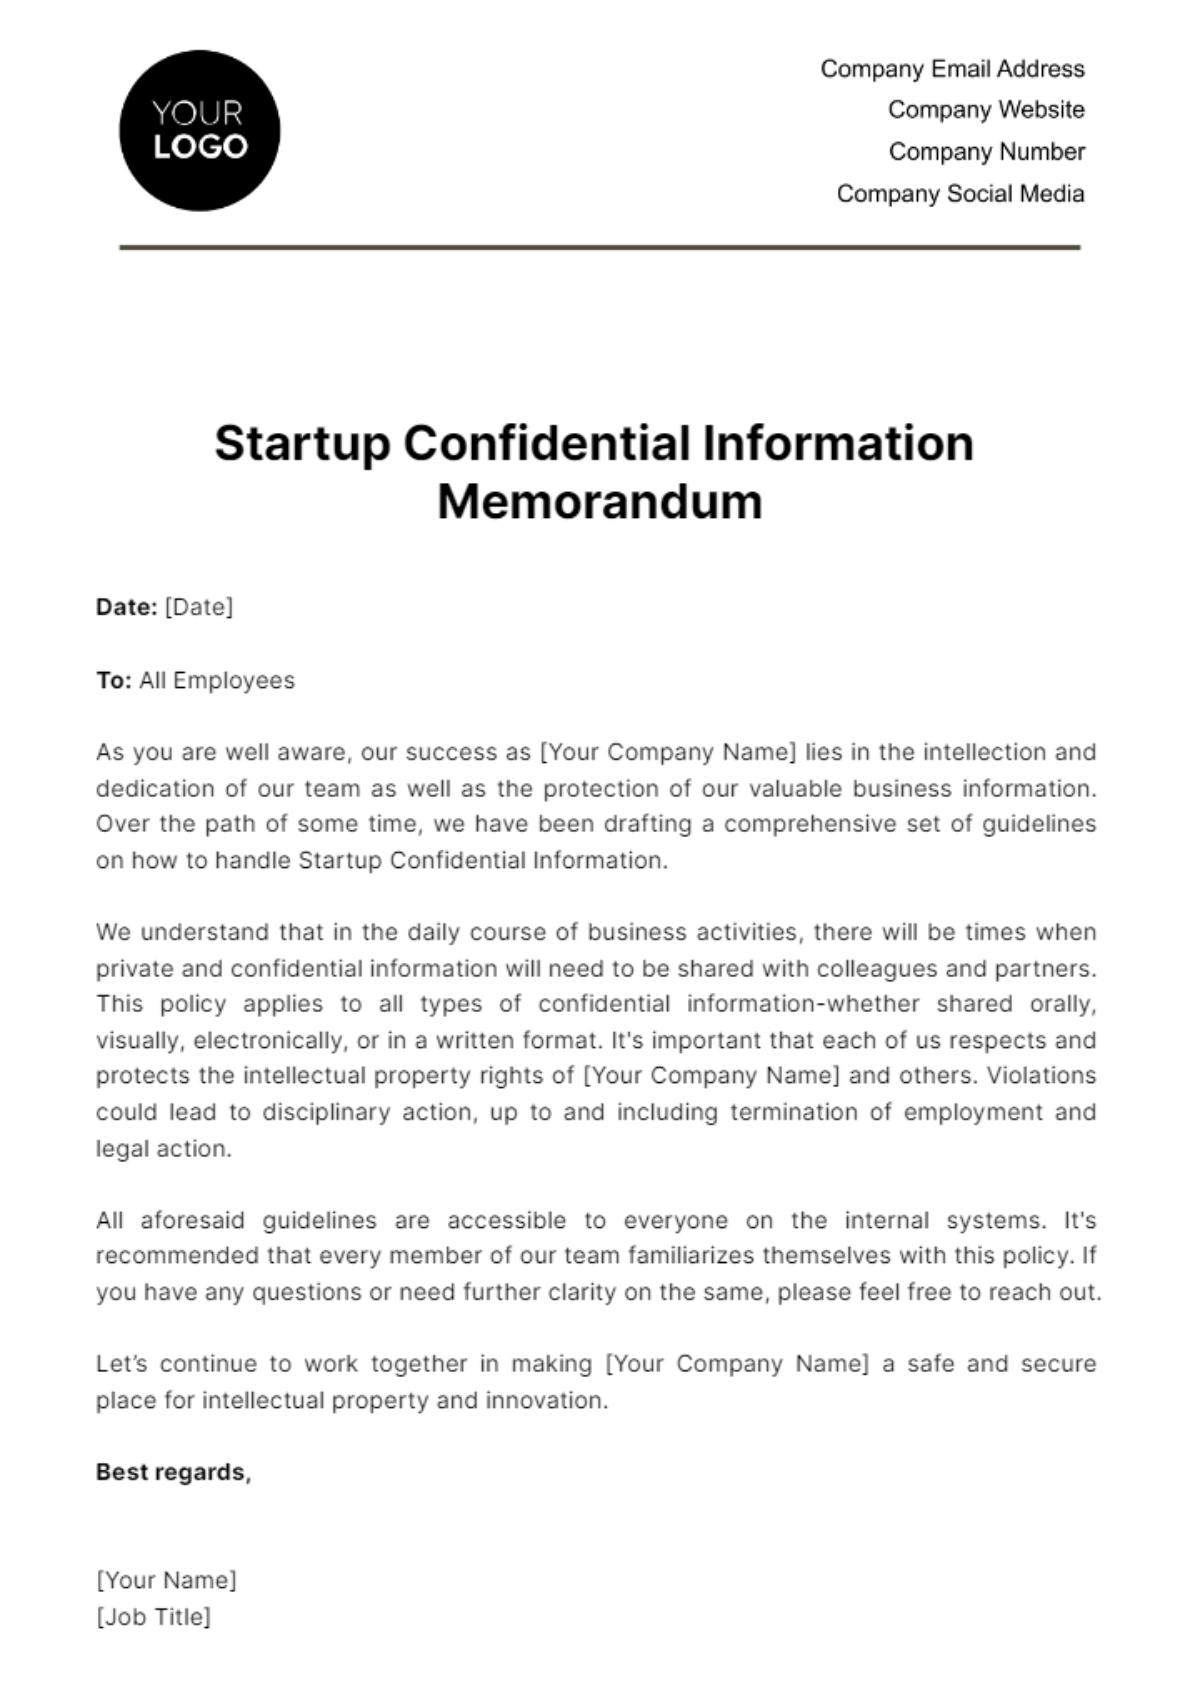 Free Startup Confidential Information Memorandum Template